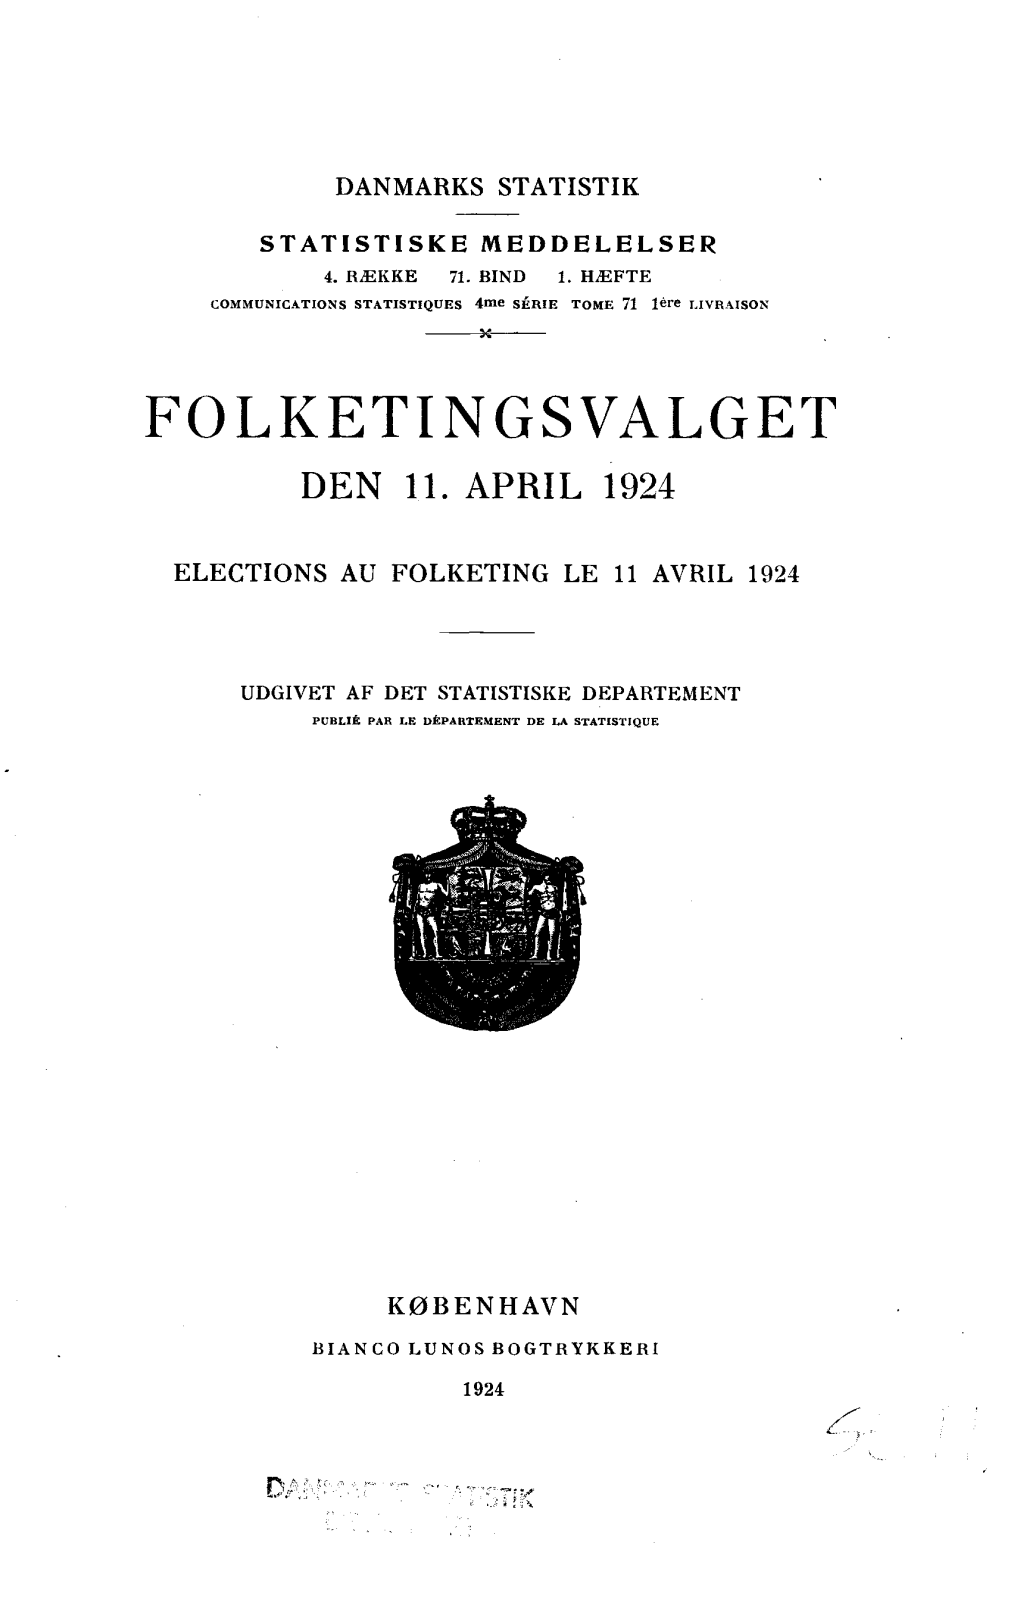 Folketingsvalget Den 11. April 1924